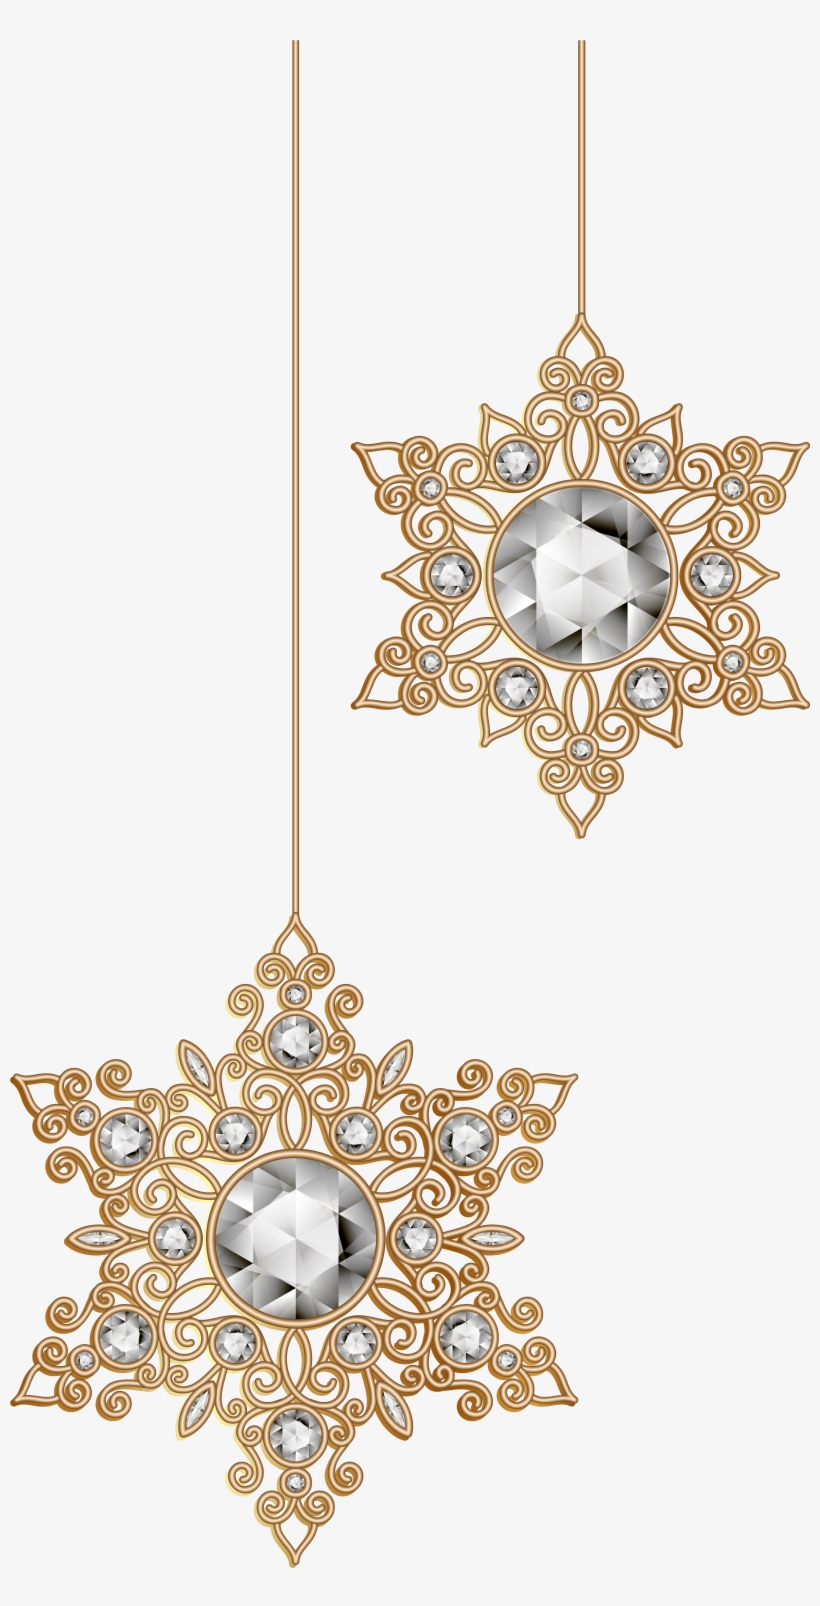 Christmas Snowflakes Ornaments Png Clip Art Image - Christmas Decorations Snowflakes Png, transparent png #191422